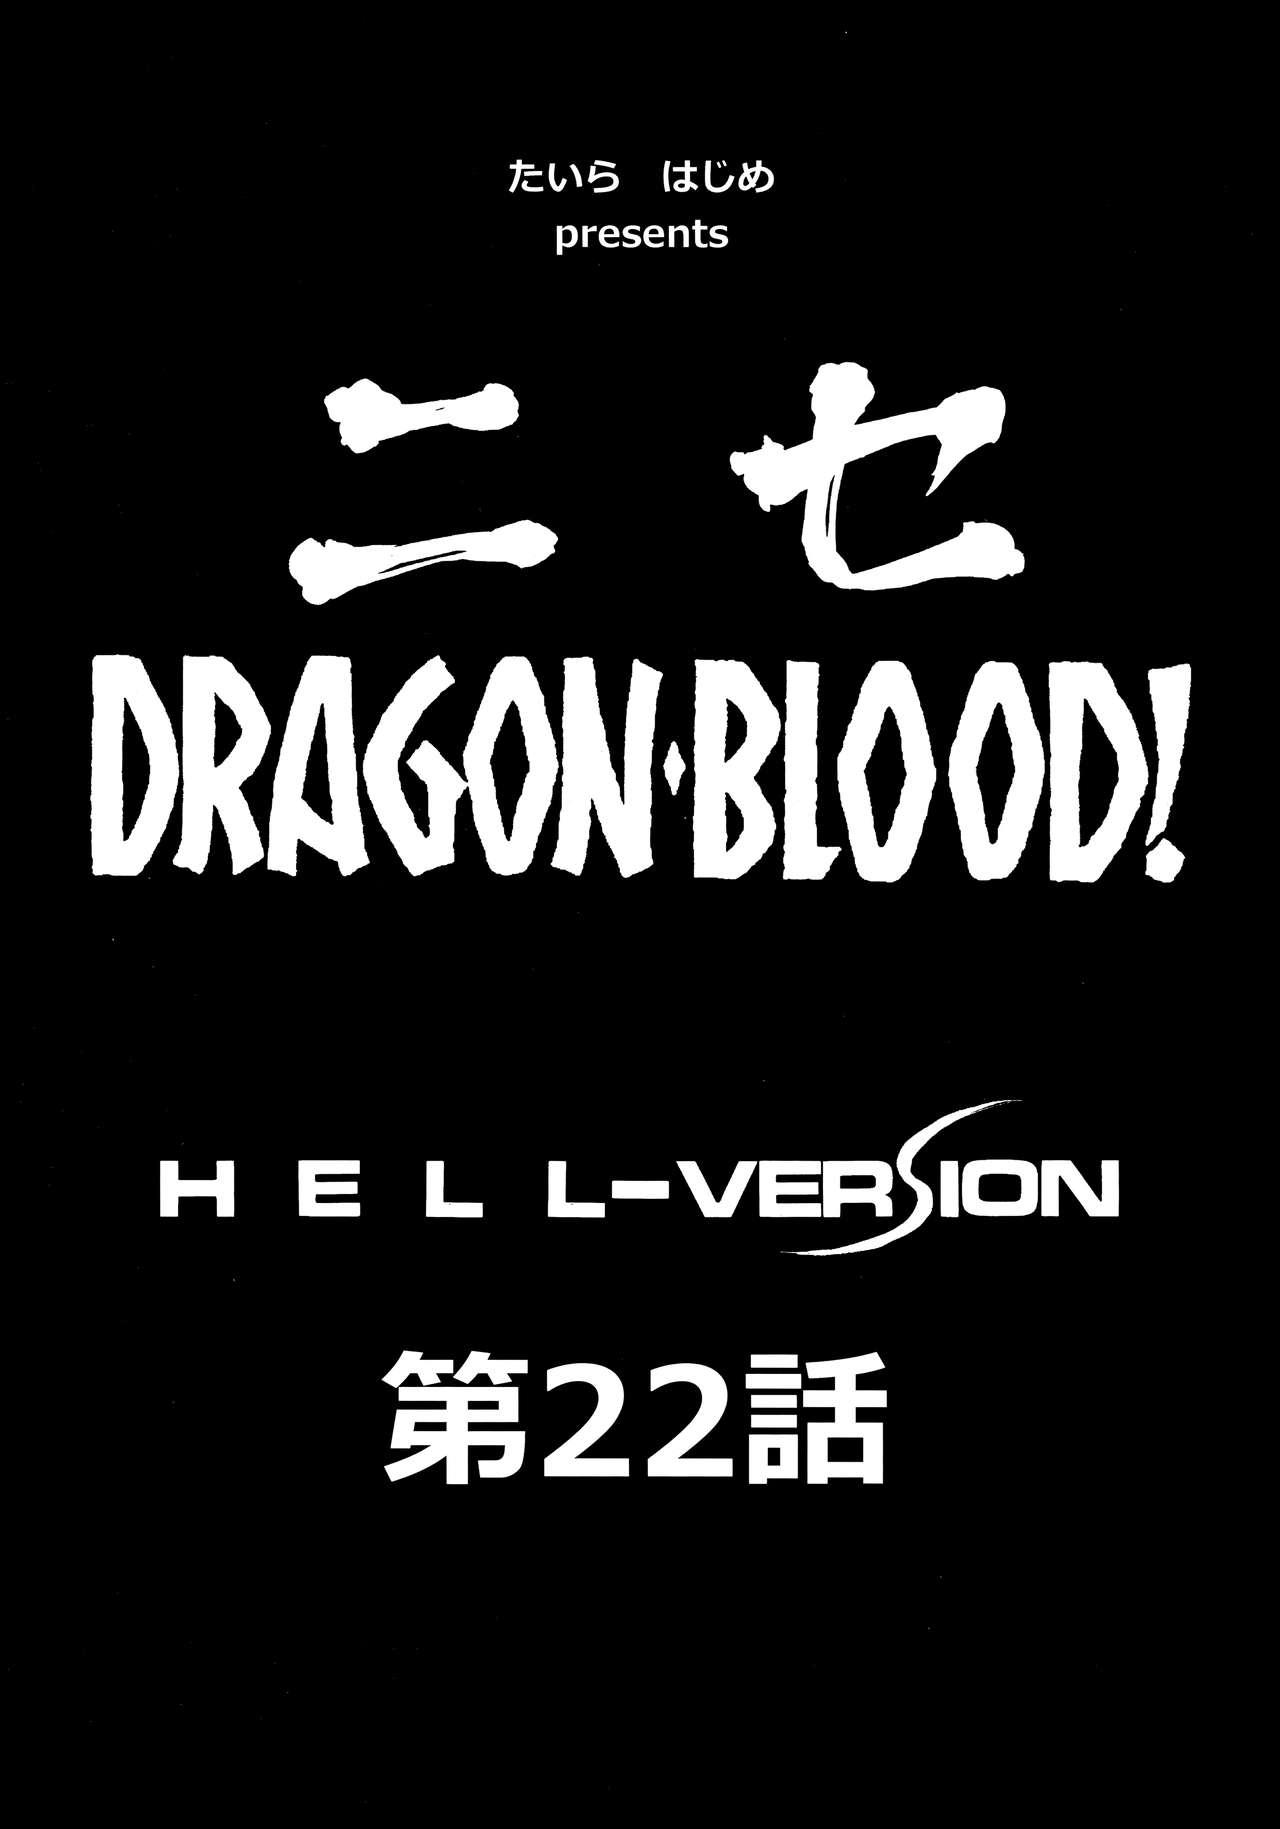 Nise Dragon Blood! 22. 7